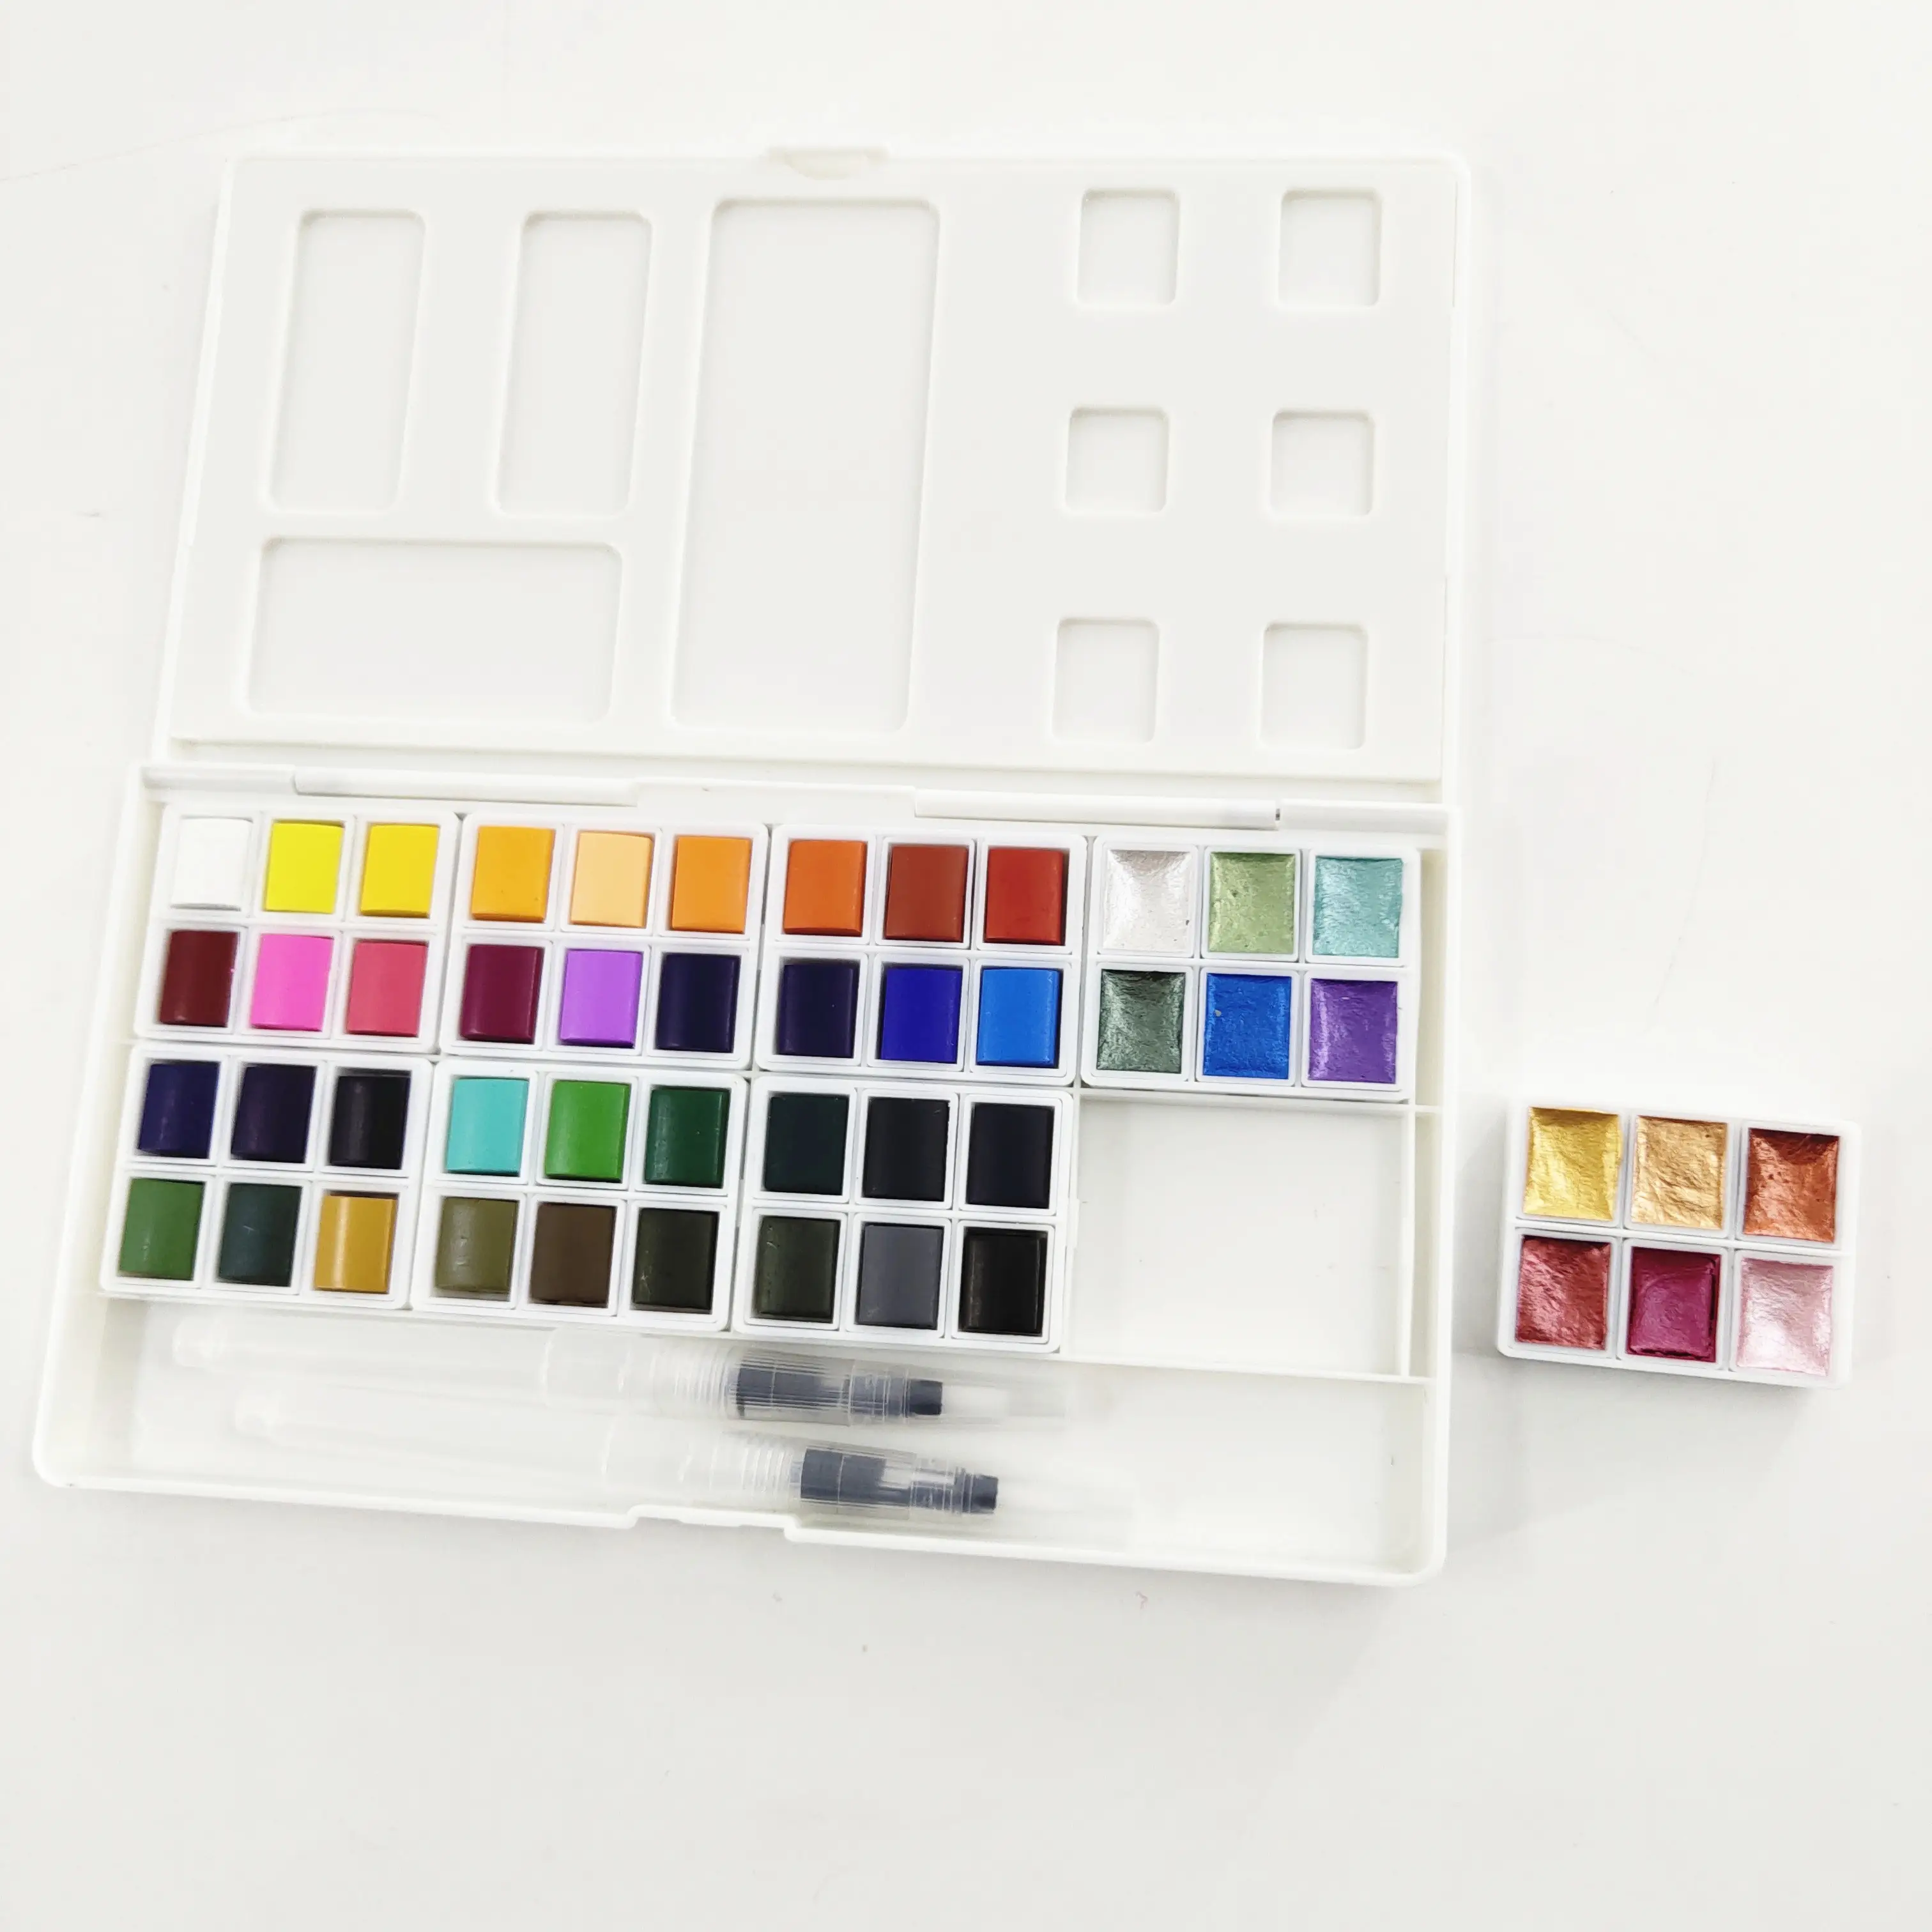 China Factory Premium Colors Paint Kits Professional Painting Sets With Watercolor Paint Brush Pens Palette Storage Case